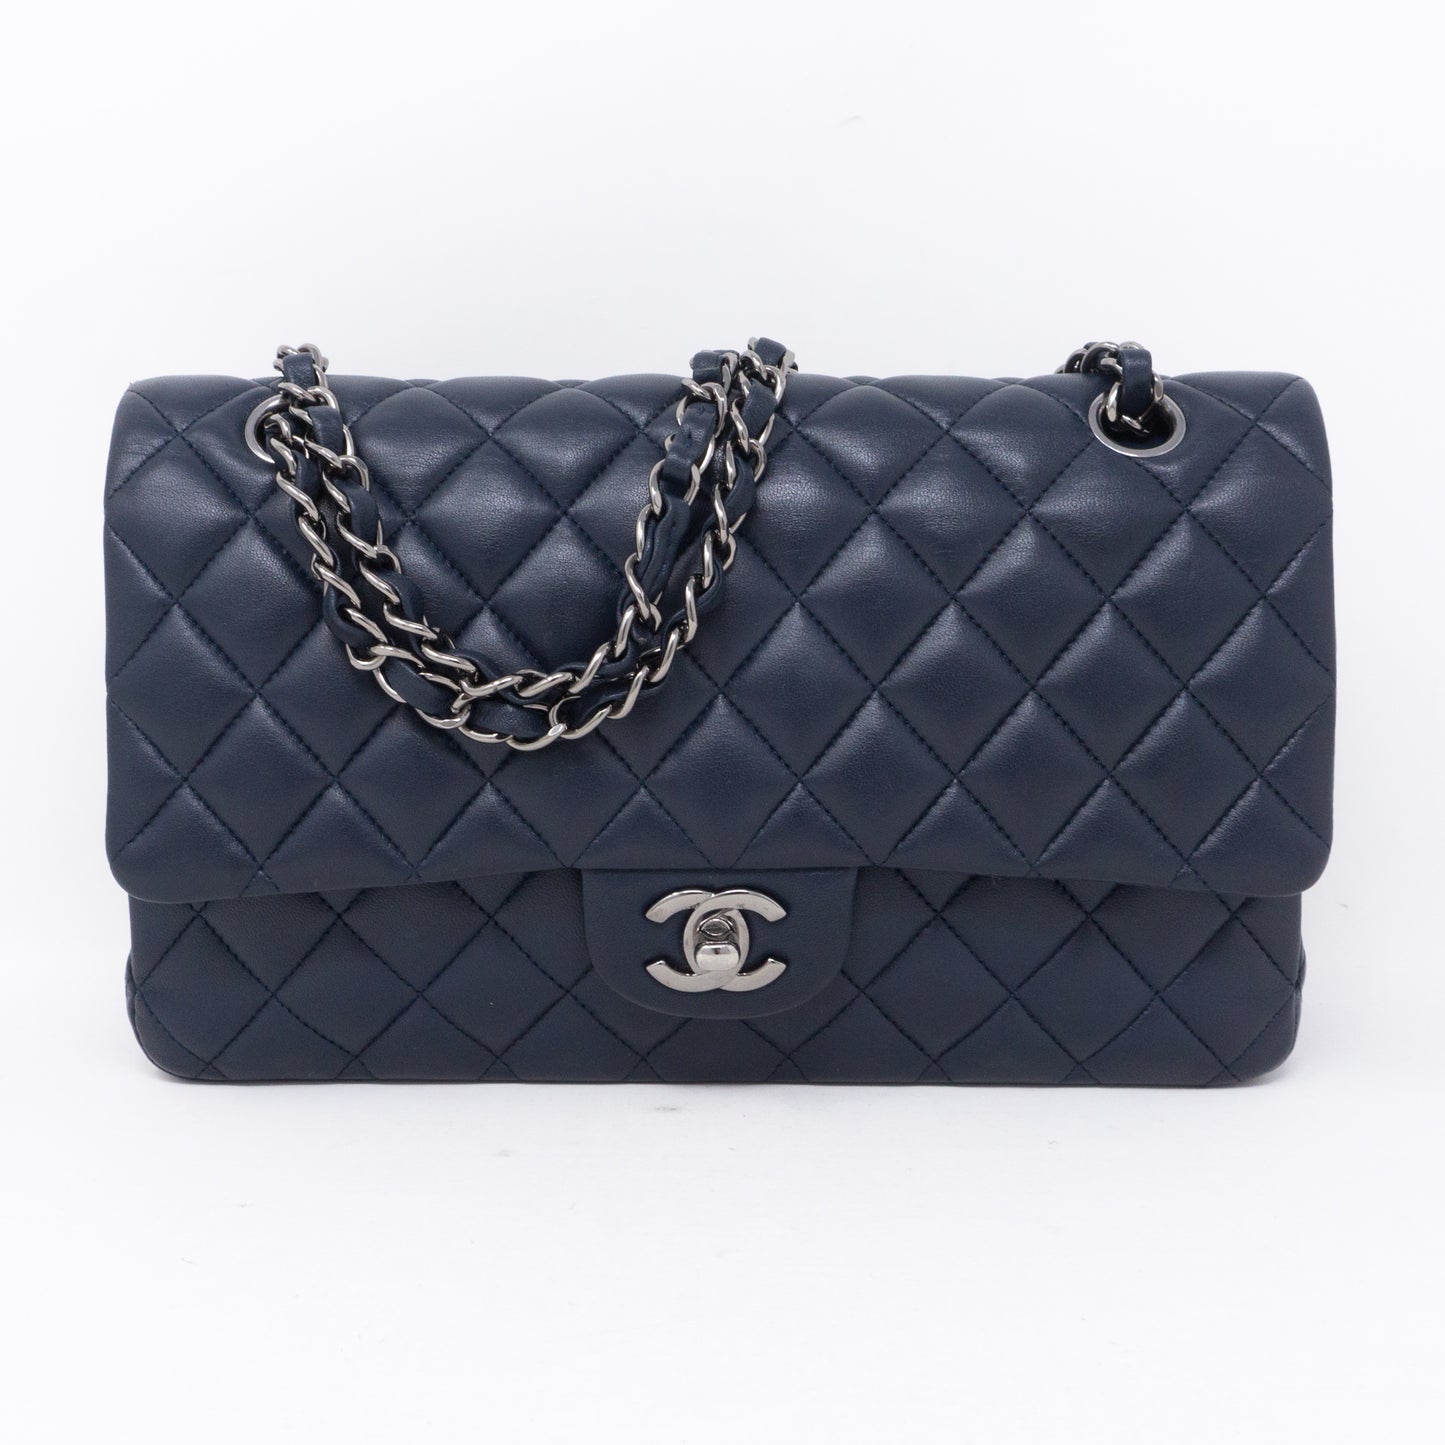 Chanel Silver-Tone Hardware Shoulder Bags